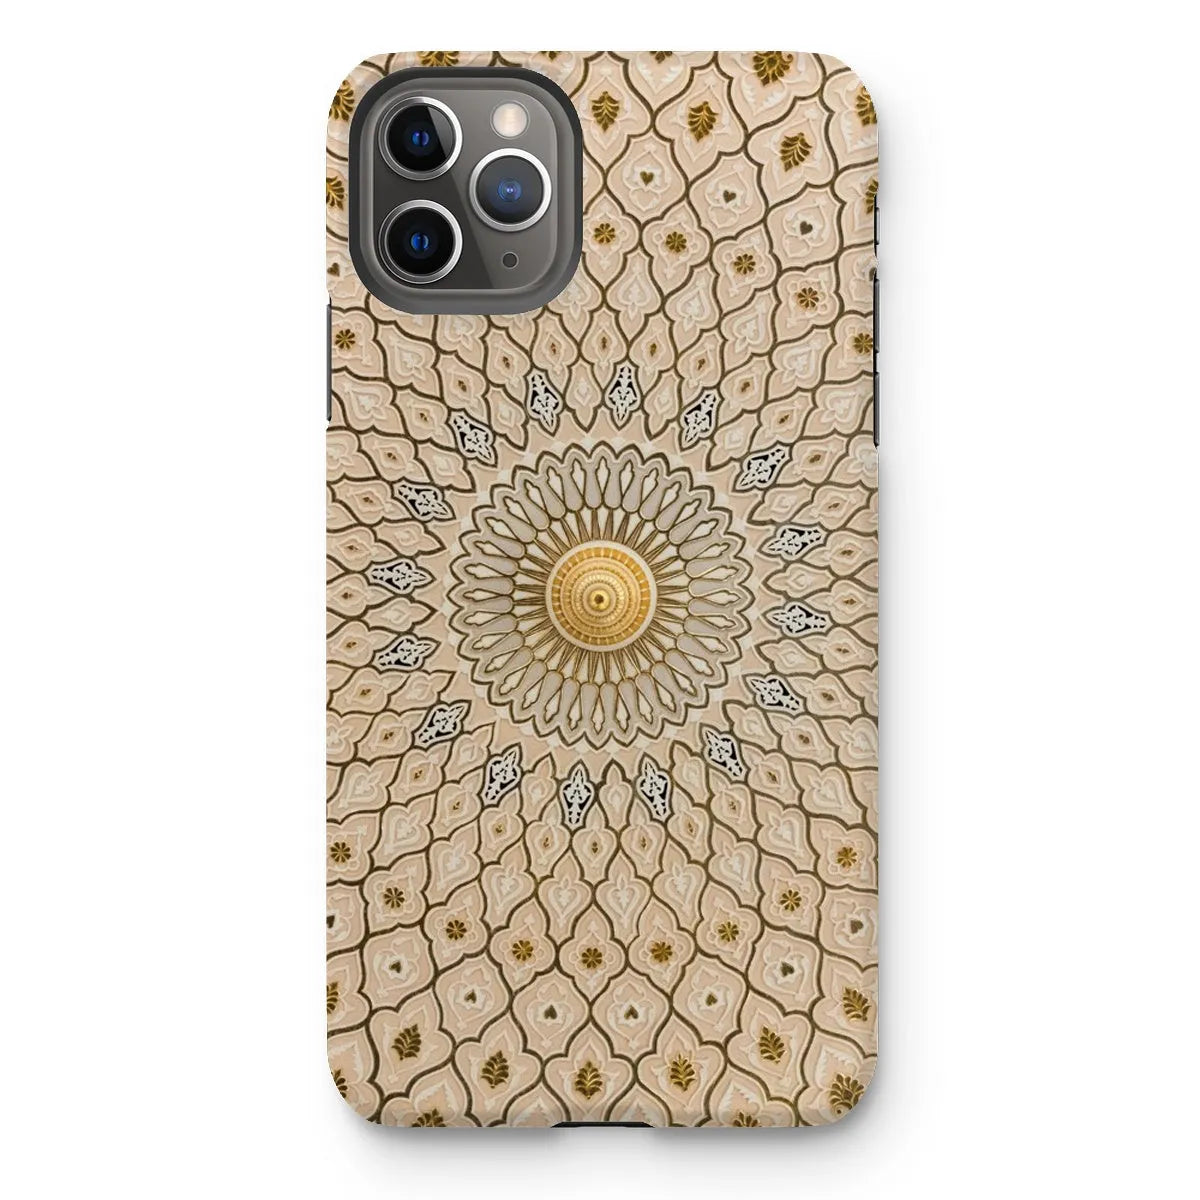 Divine Order - Islamic Aesthetic Art Phone Case - Iphone 11 Pro Max / Matte - Mobile Phone Cases - Aesthetic Art